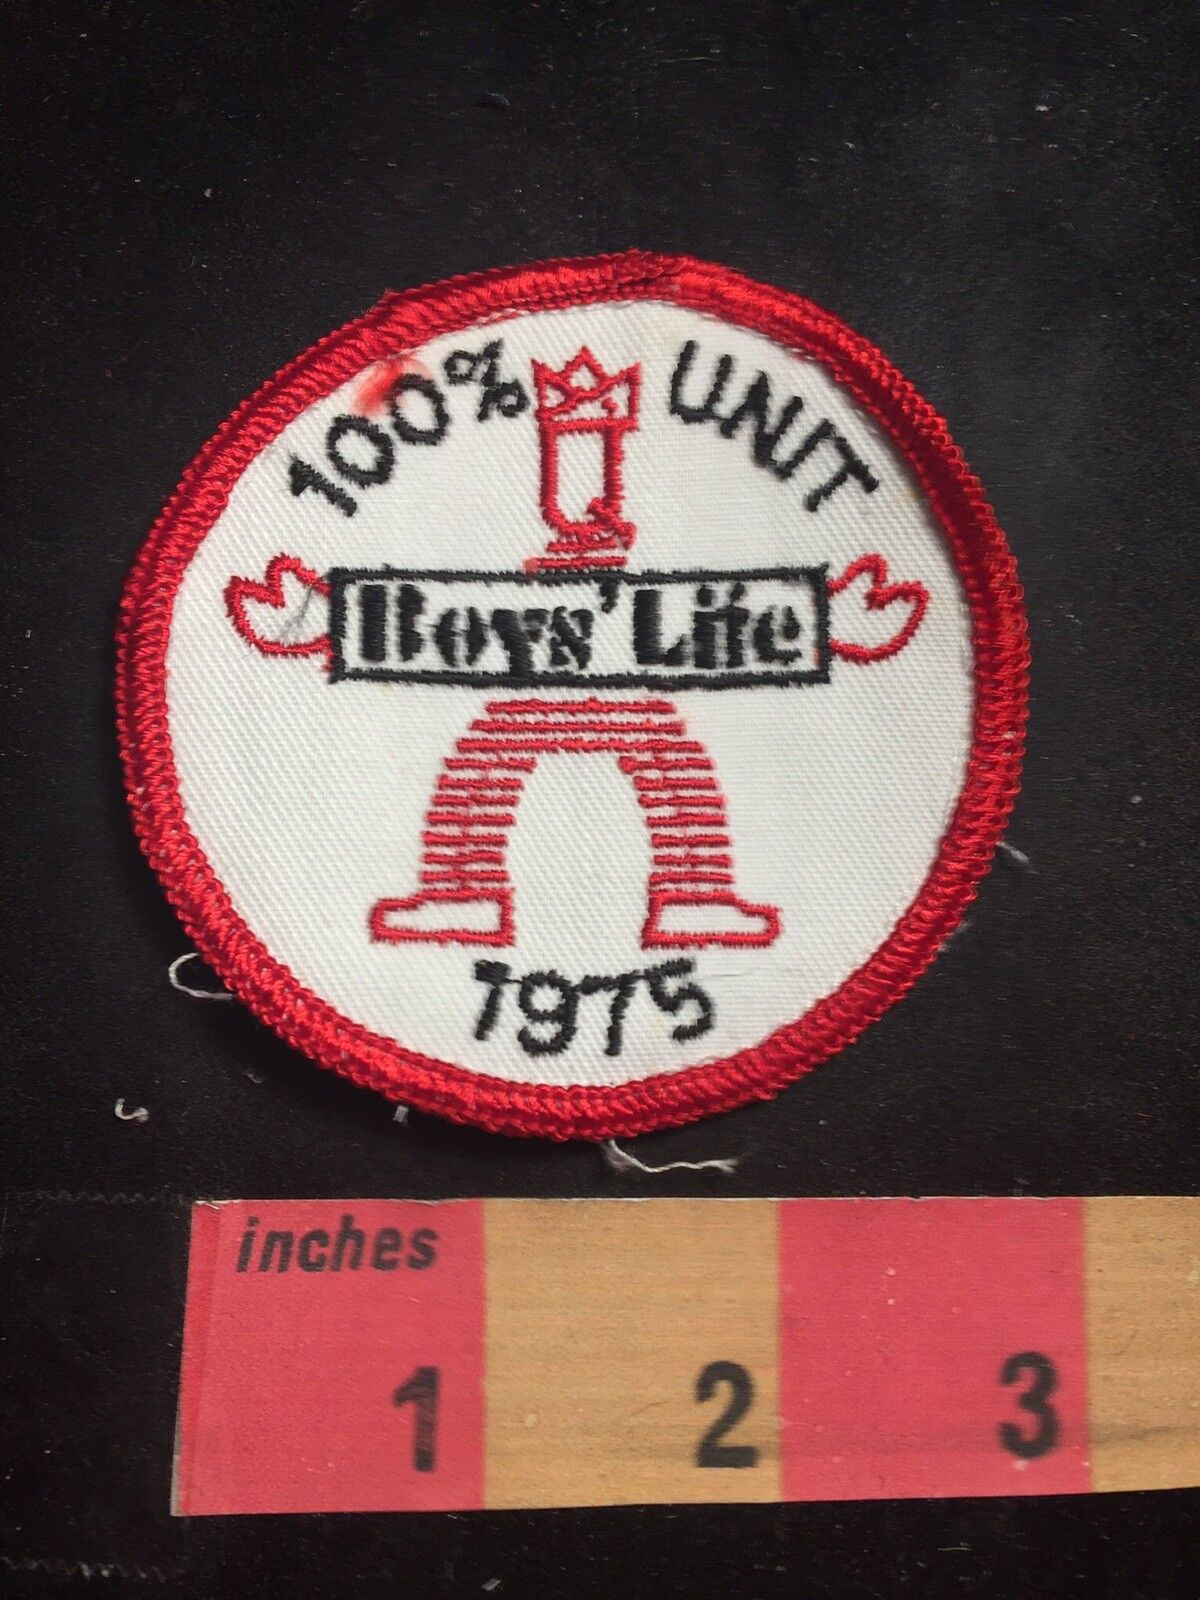 Vtg BSA Boy Scout BOYS LIFE 100% UNIT 1975 Patch 80G3